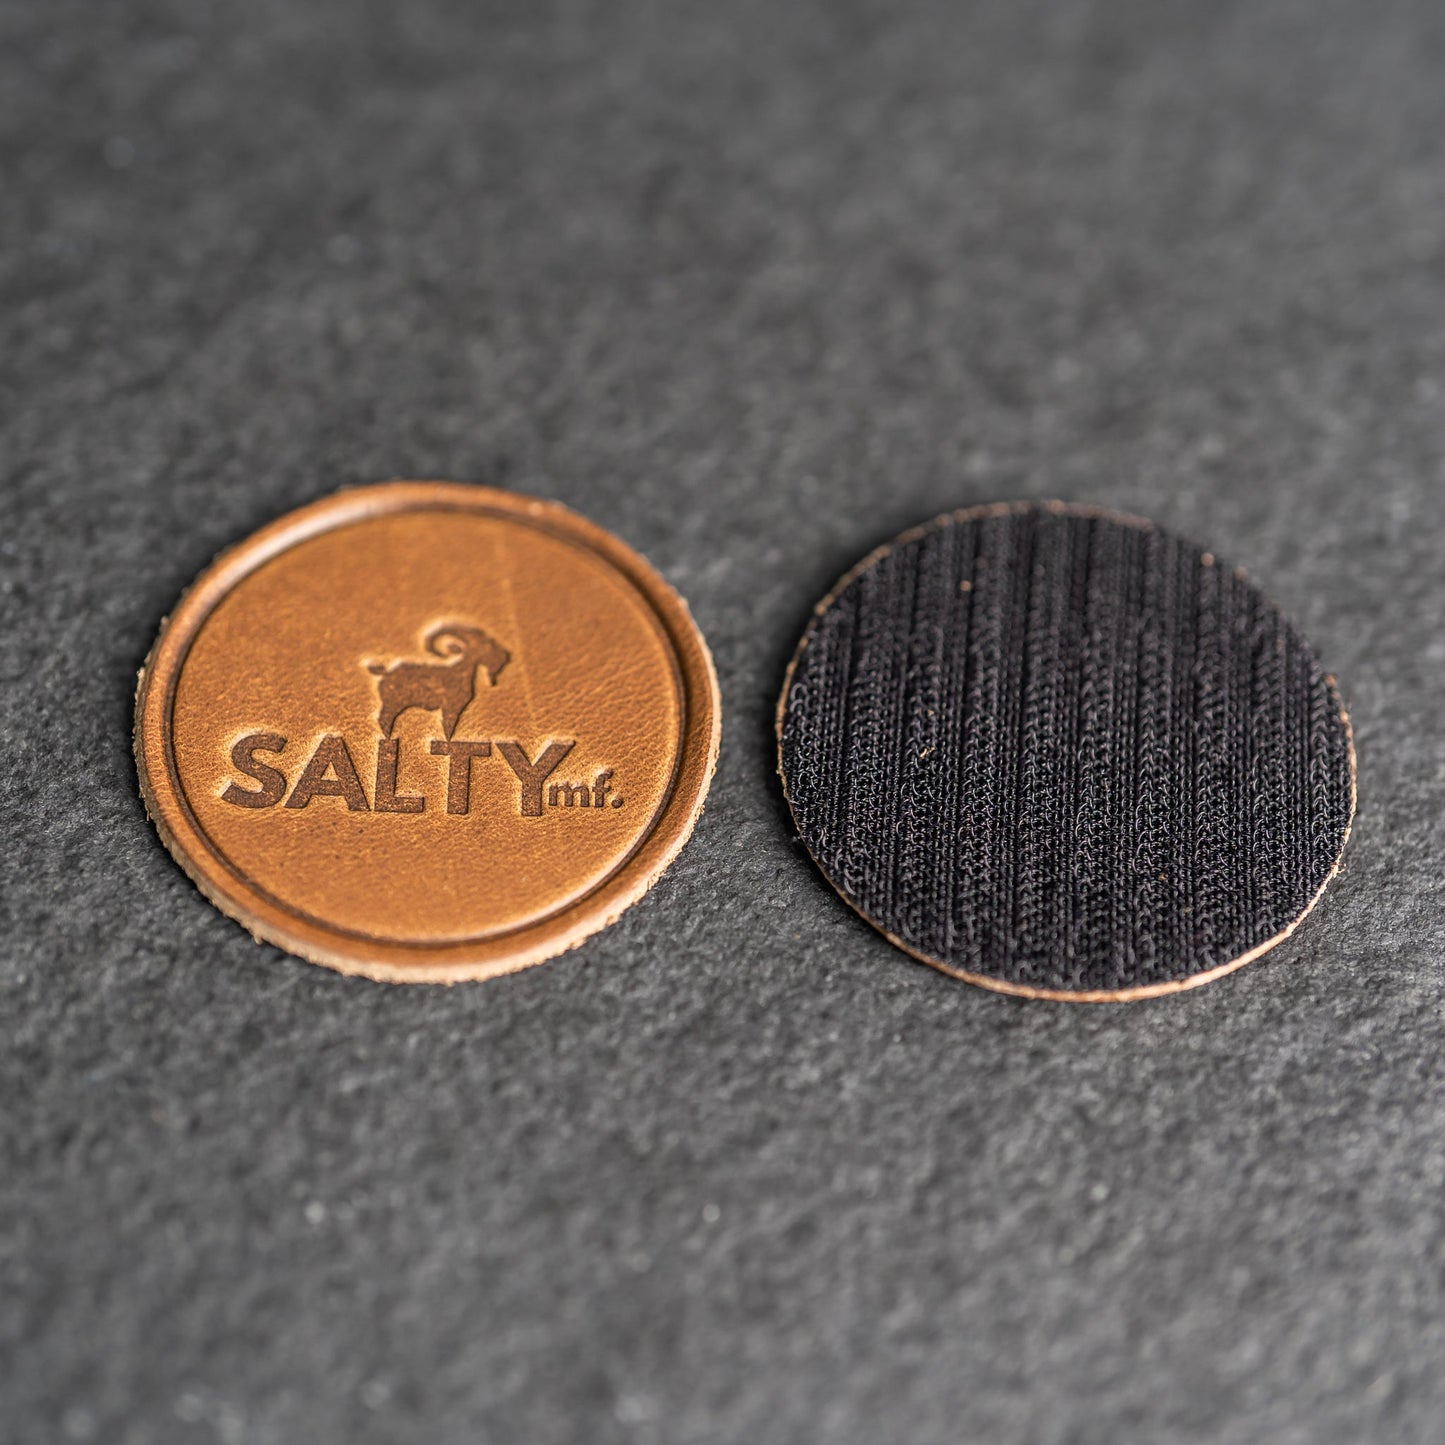 SaltyMF Leather Patch